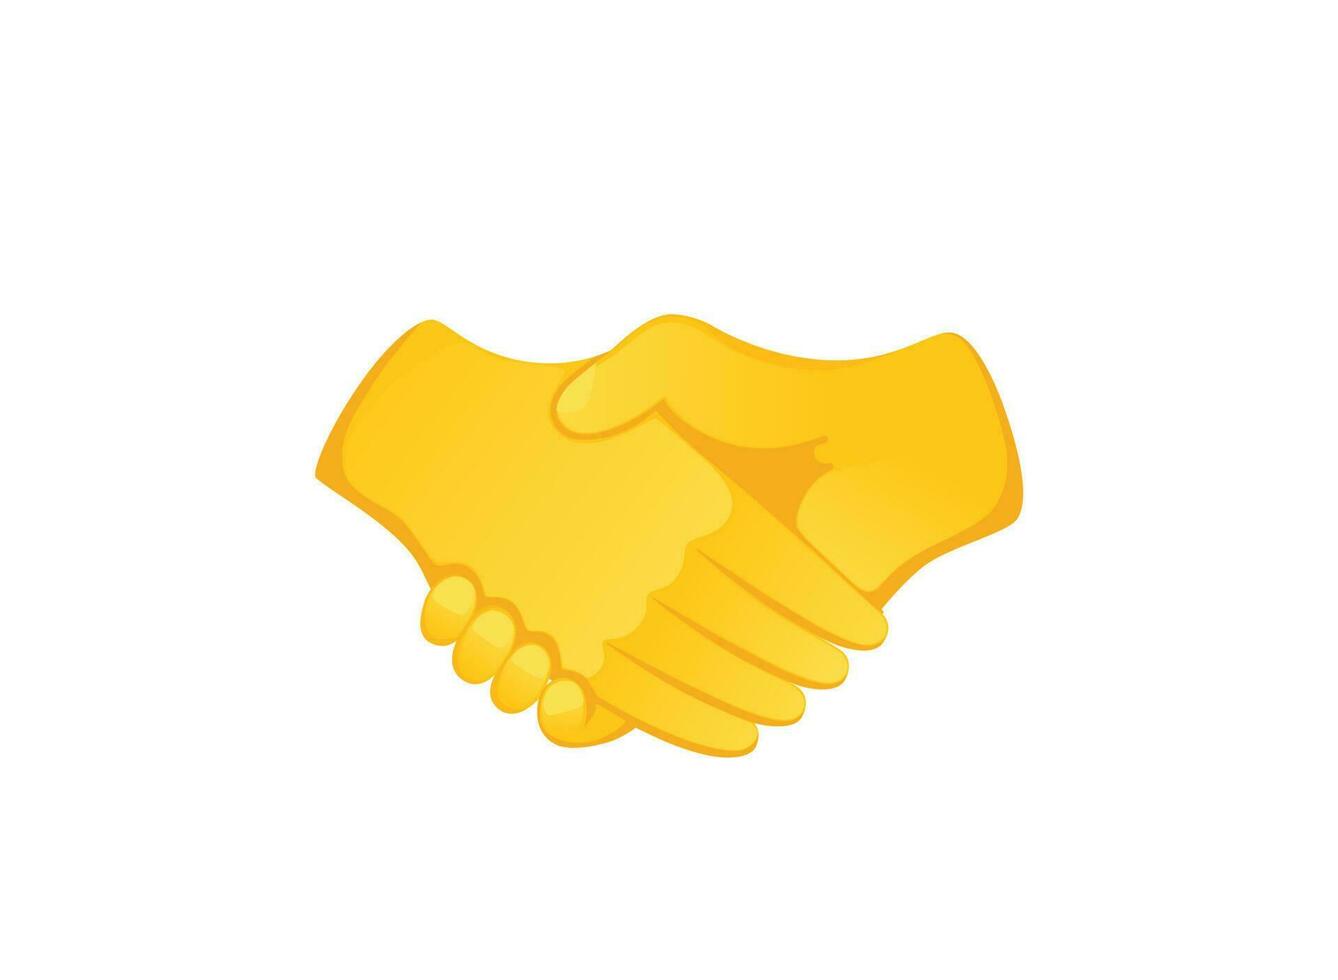 poignée de main icône. main geste emoji vecteur illustration.